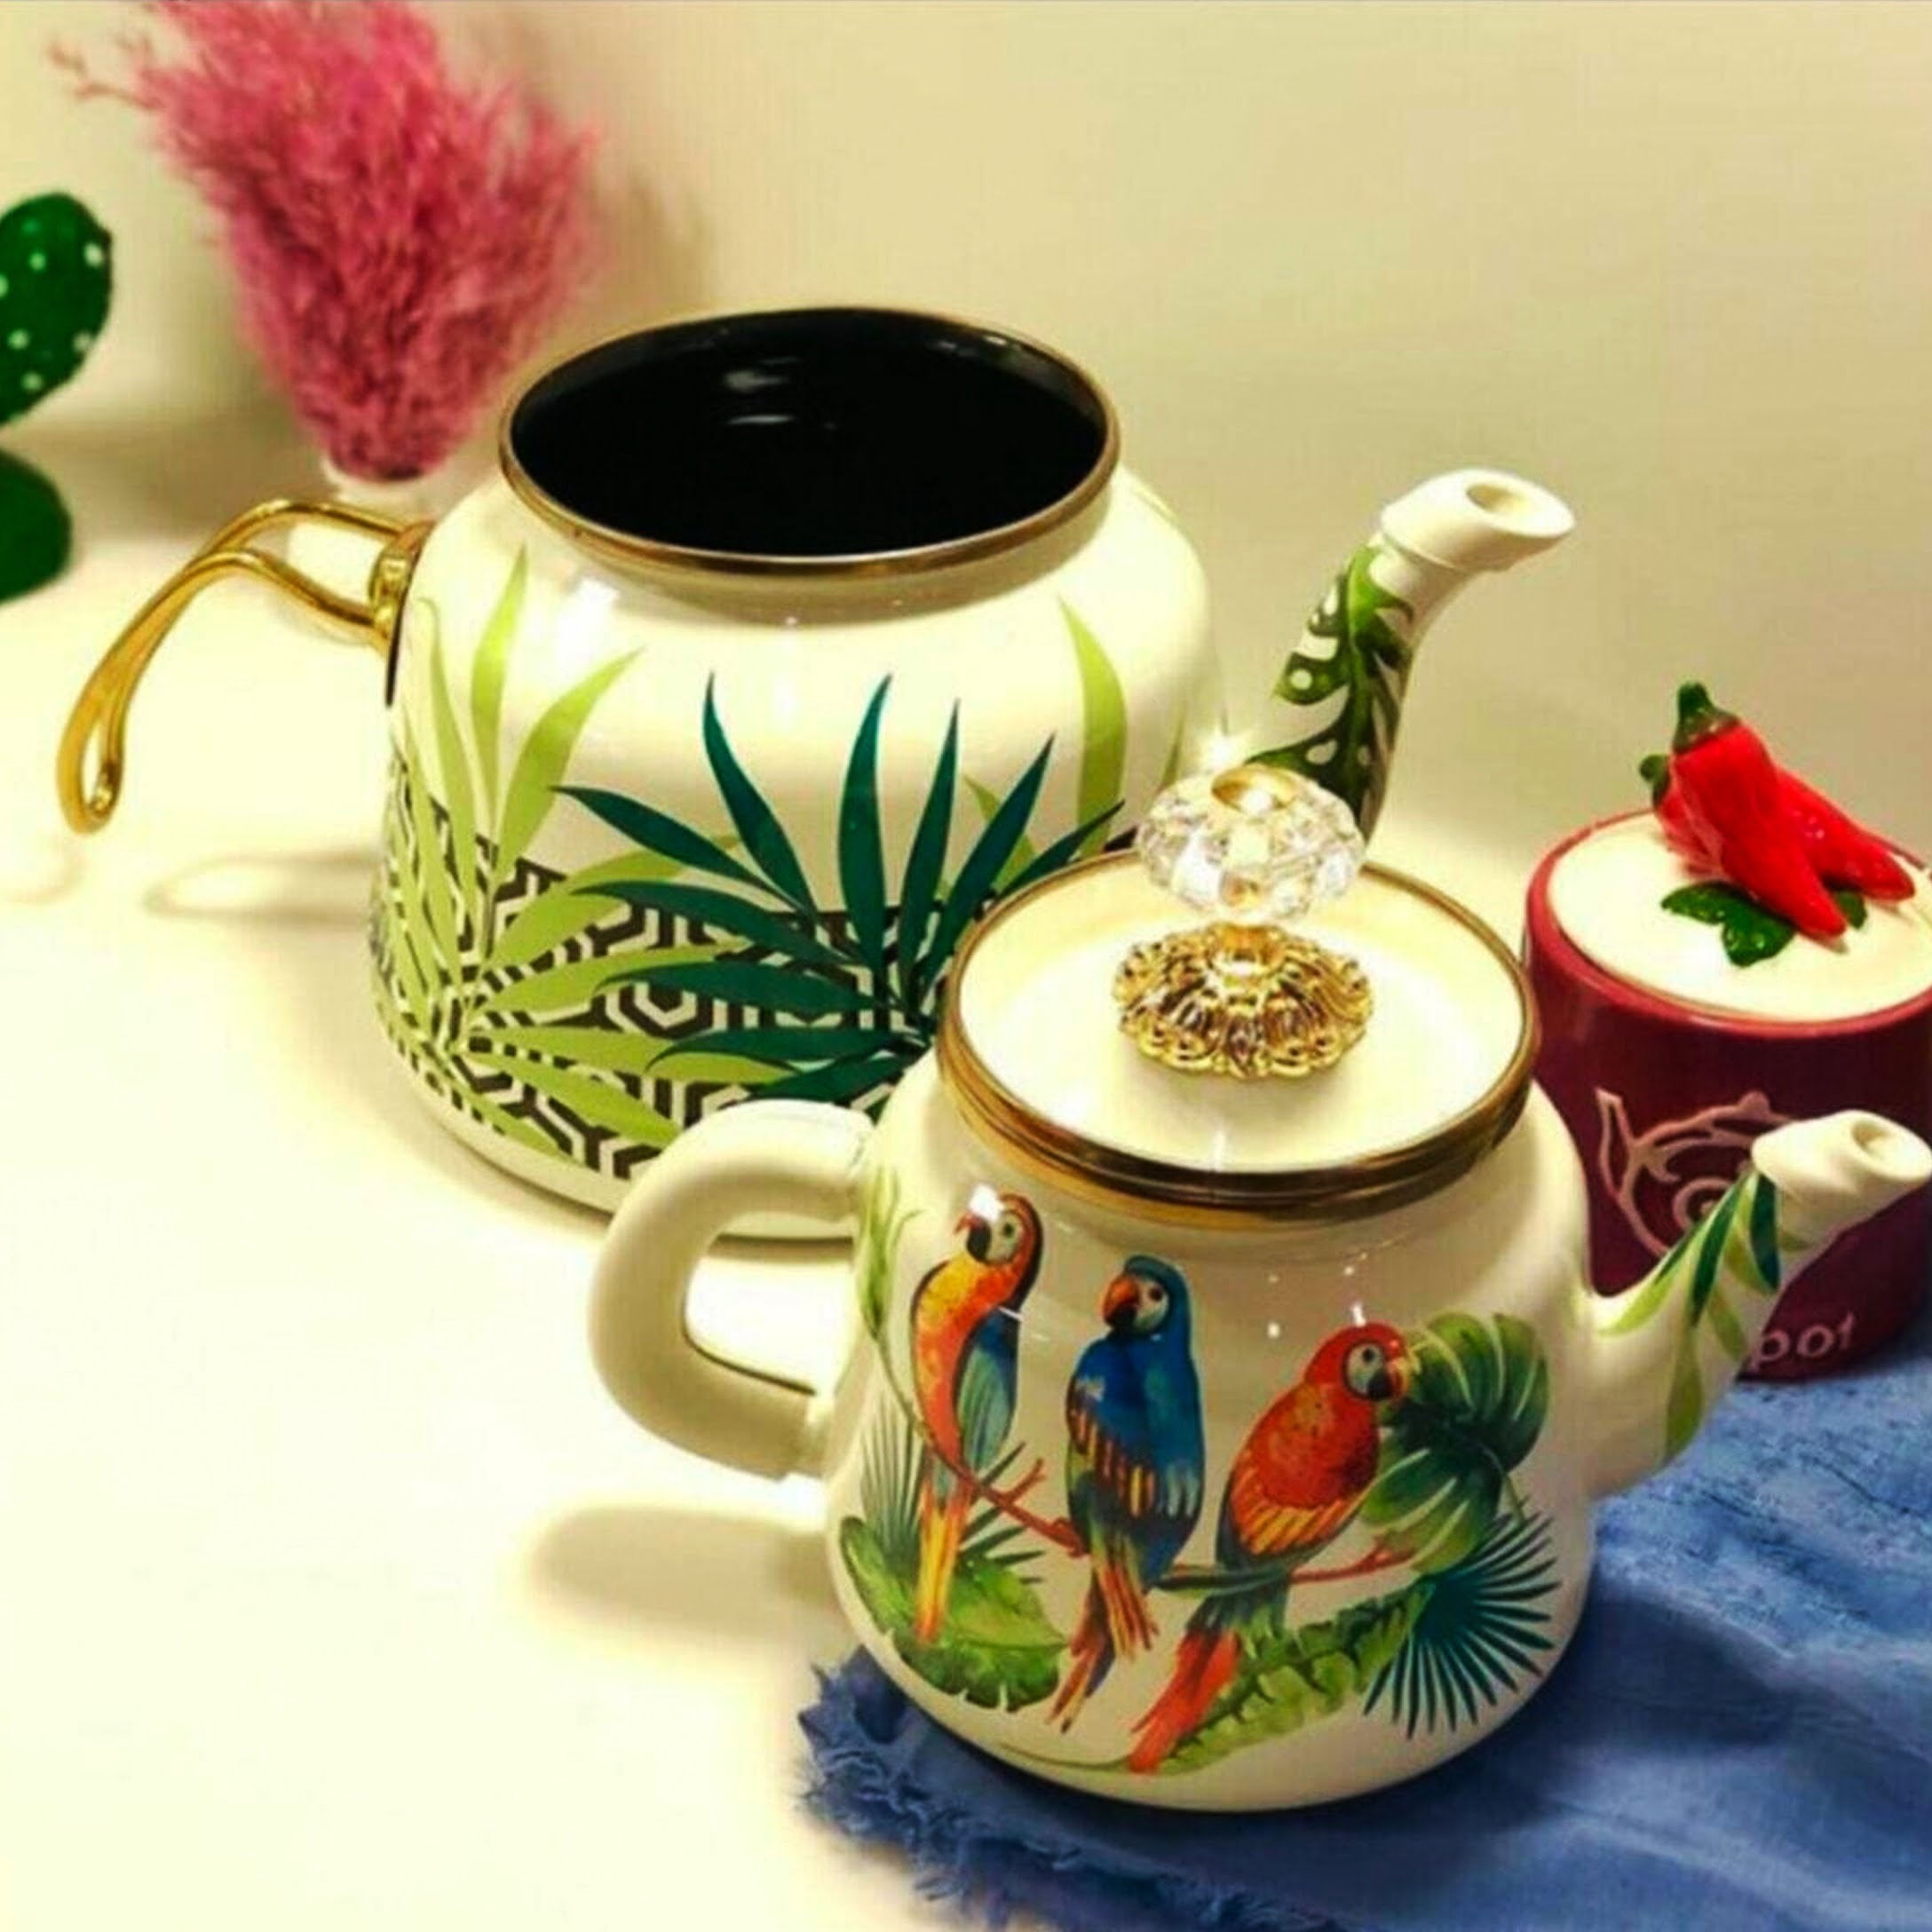 https://traditionalturk.com/wp-content/uploads/2021/08/vintage-parrot-pattern-enamel-turkish-tea-pot-kettle-4.jpg